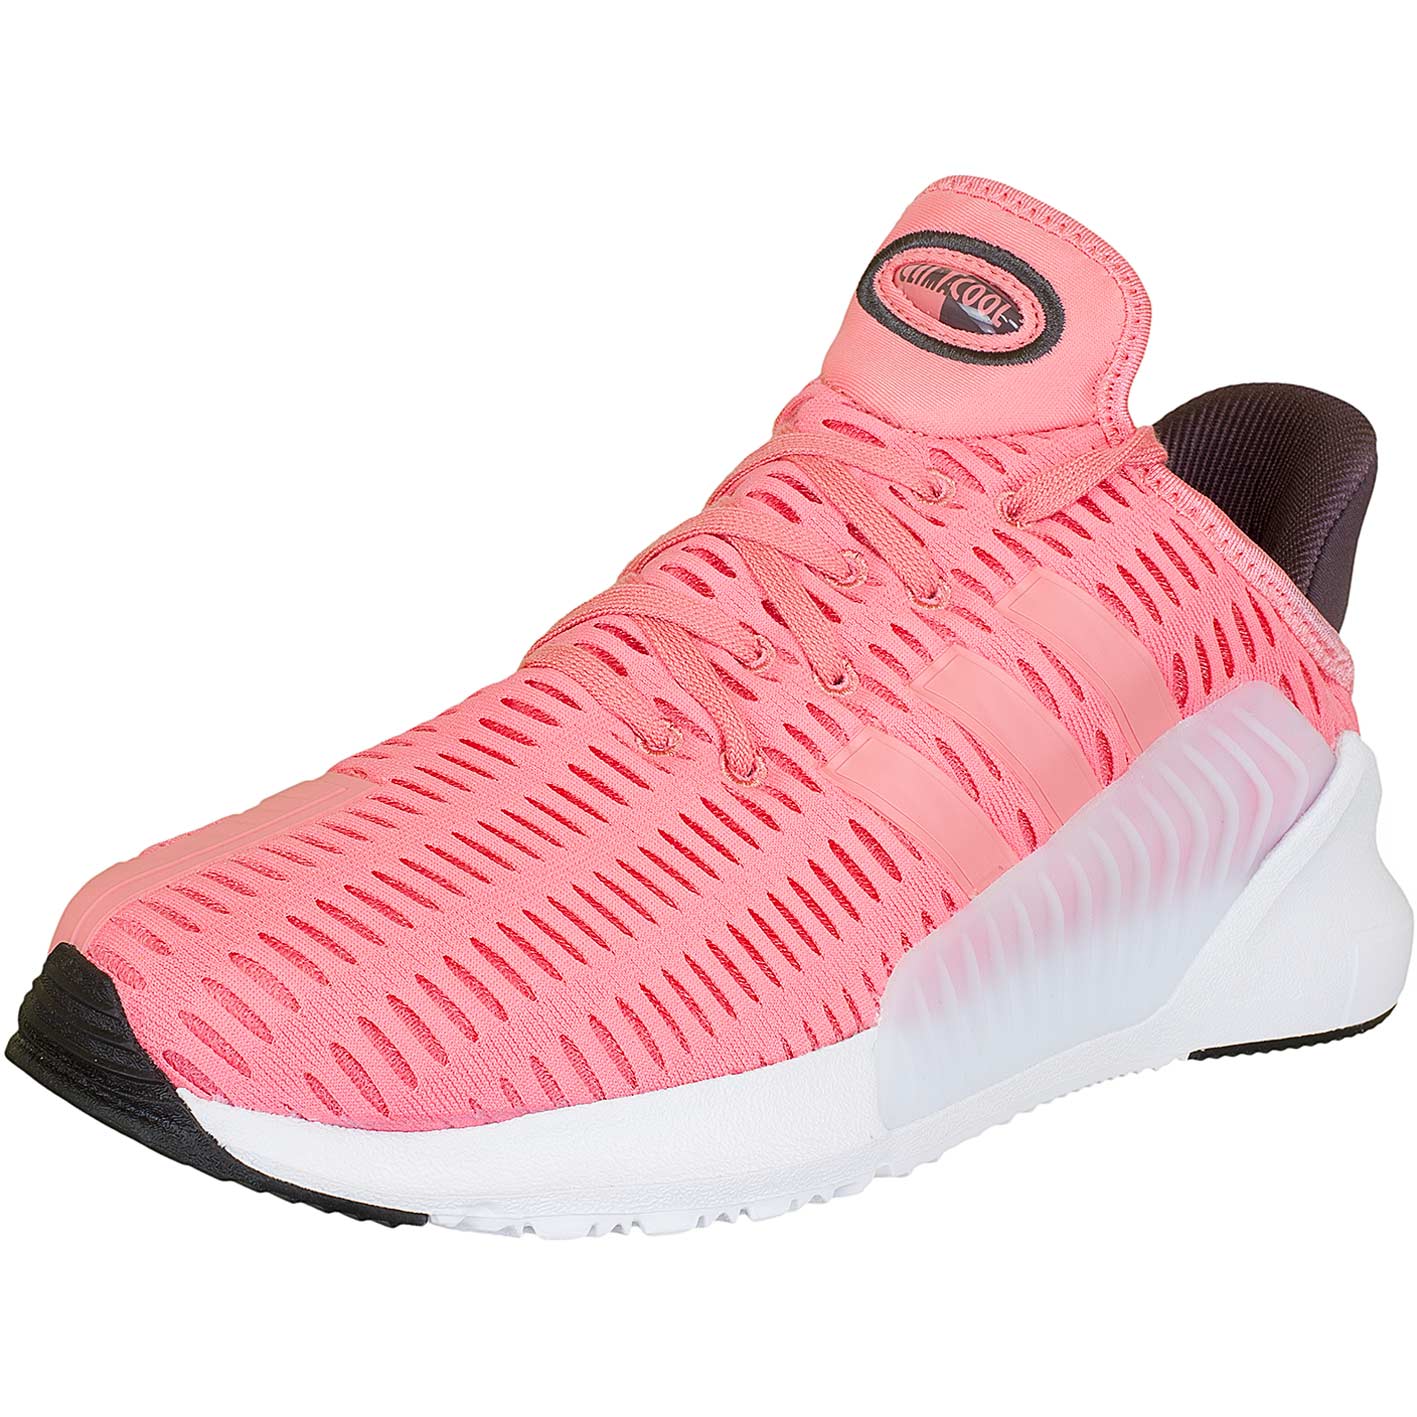 ☆ Adidas Originals Damen Sneaker Climacool 02/17 pink/weiß - hier bestellen!